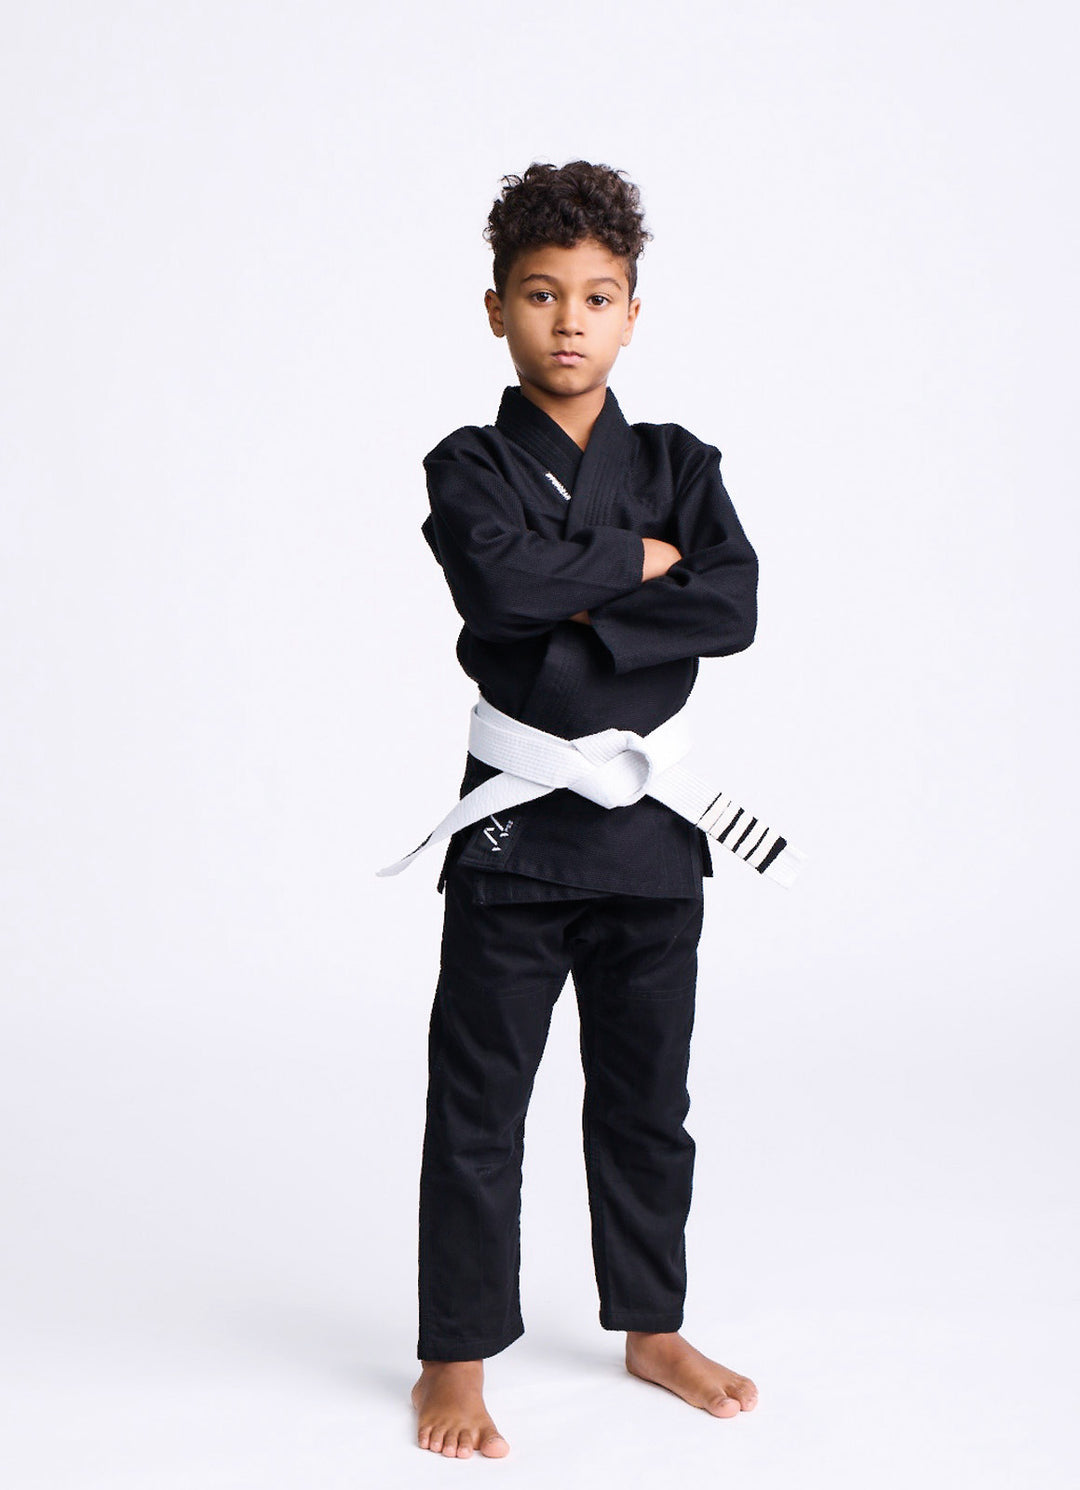 IPPON GEAR Rookie Kids BJJ Uniform